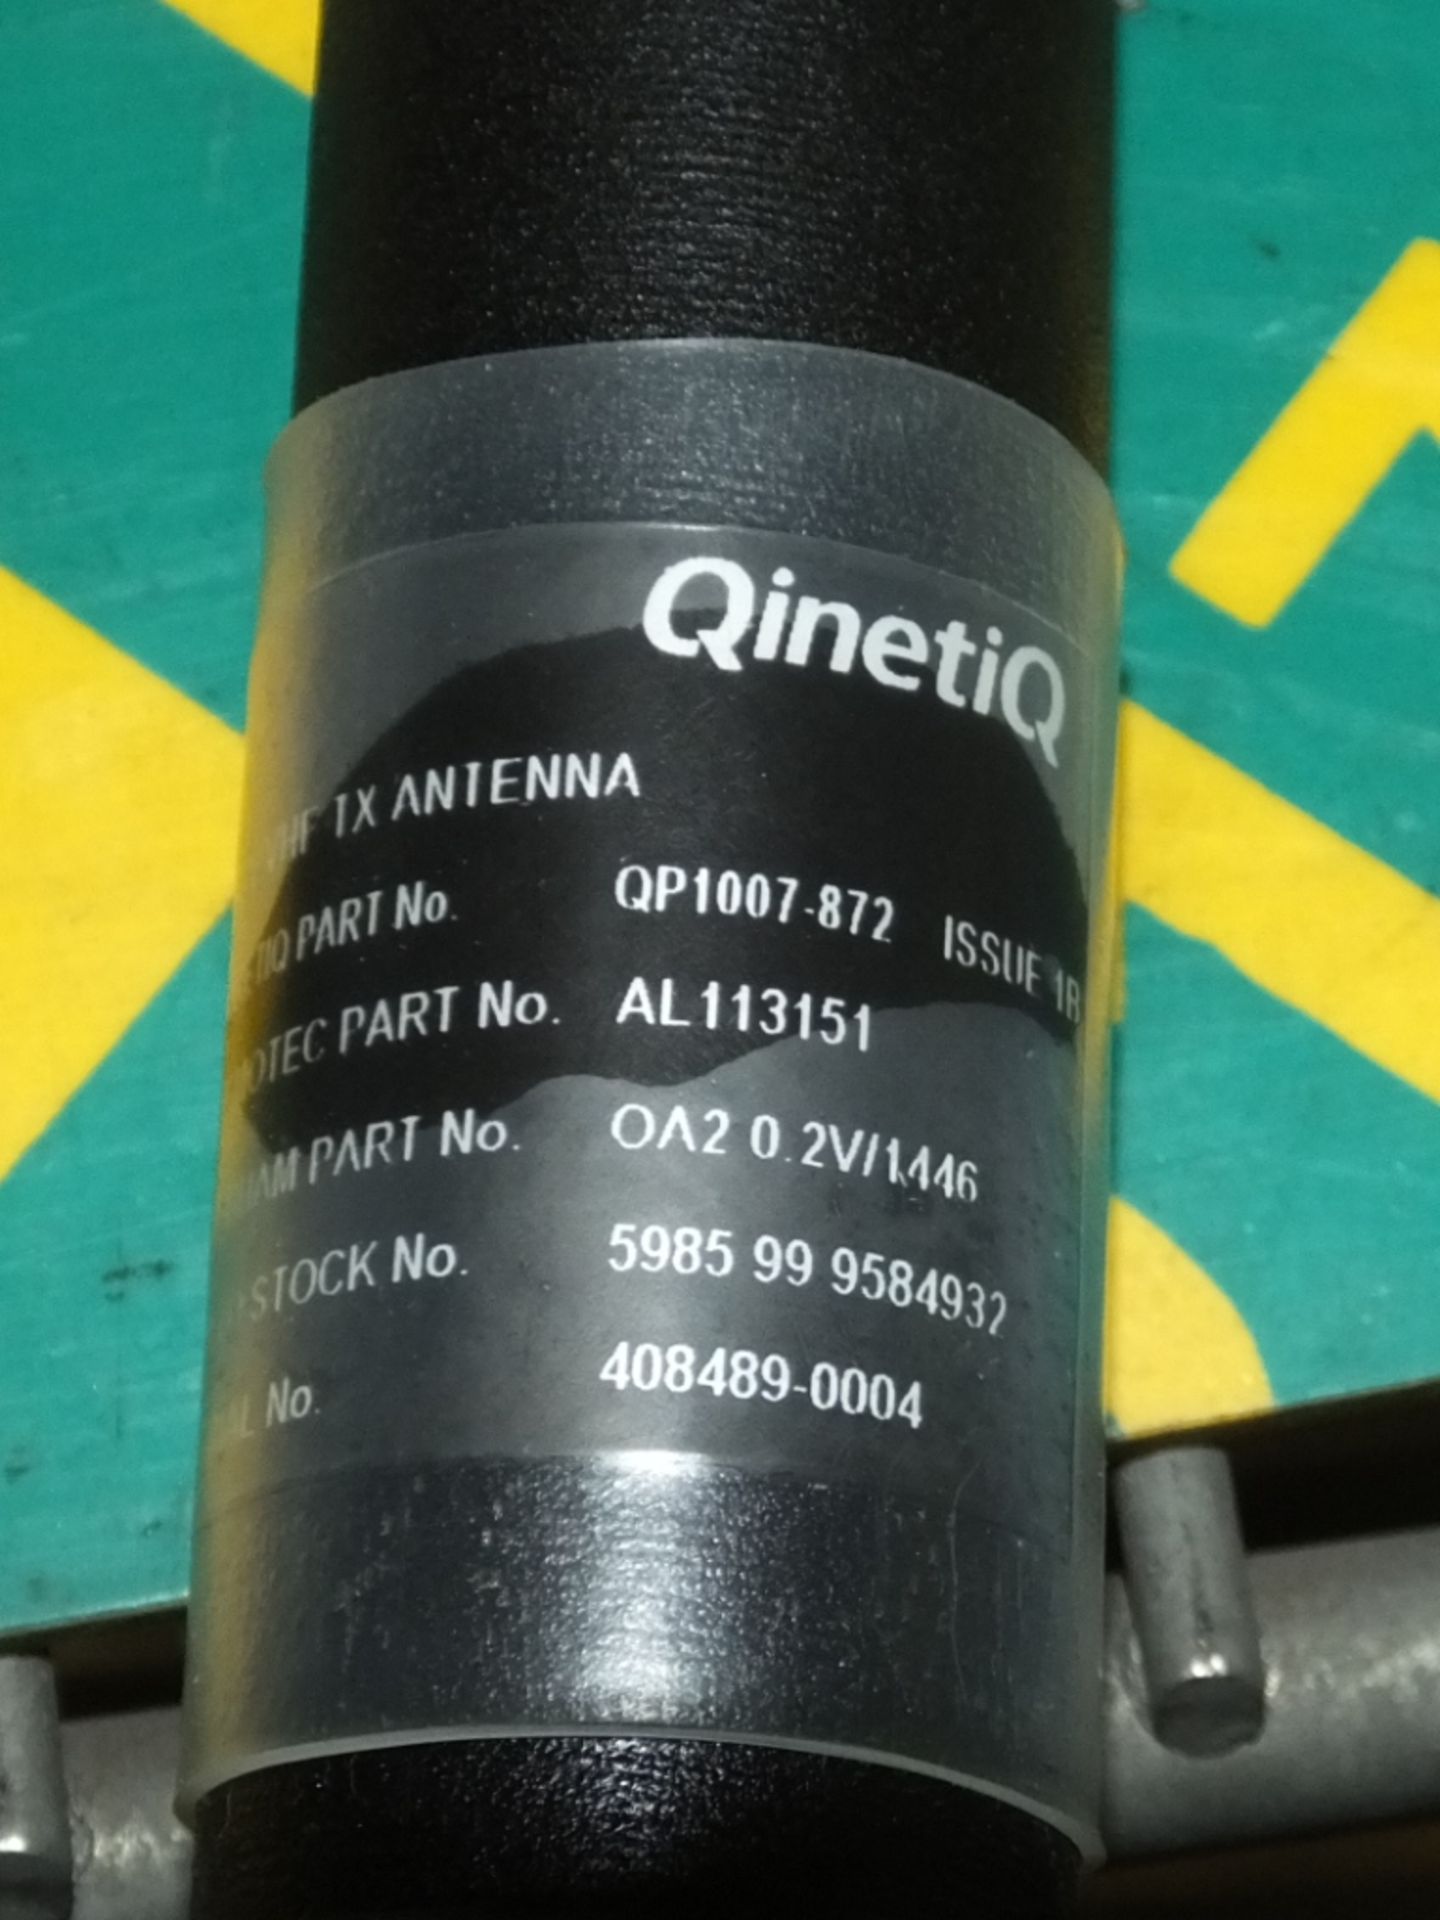 Qinetiq Antenna - QP1007-872 - Image 2 of 2